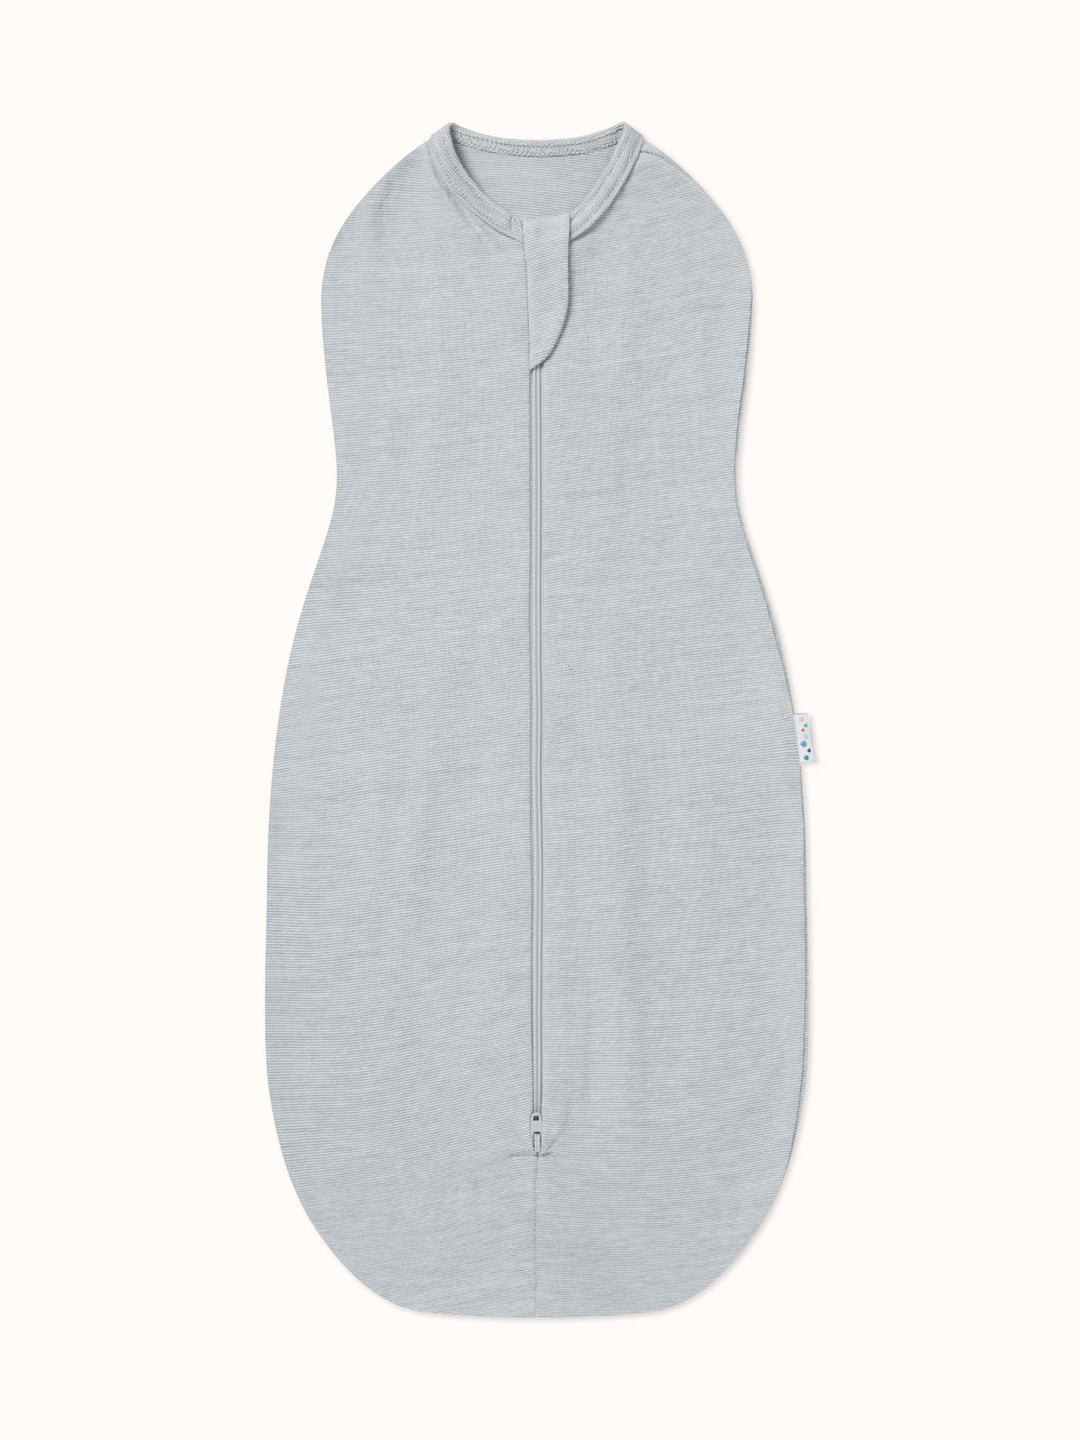 merino organic cotton baby zip swaddle superlove grey #colour_cloud-grey-melange